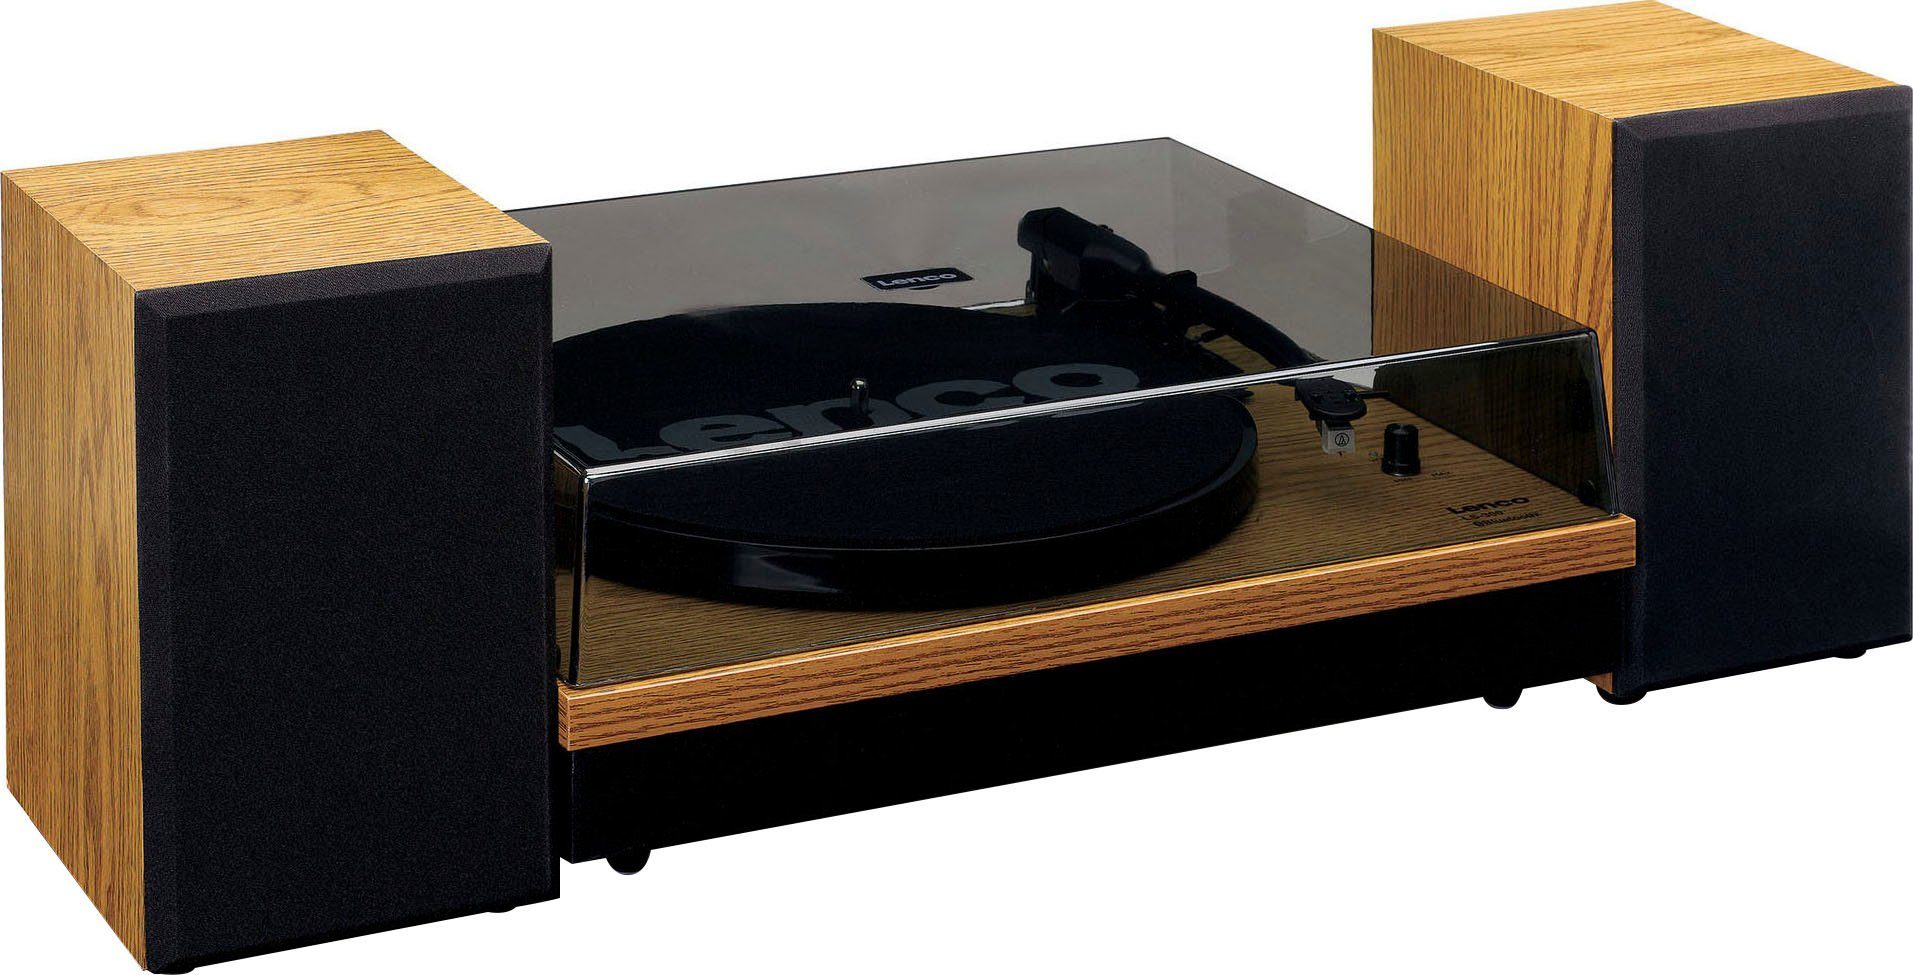 Lenco LS-300WD Plattenspieler Holz (Riemenantrieb) Lautsprechern mit Plattenspieler ext